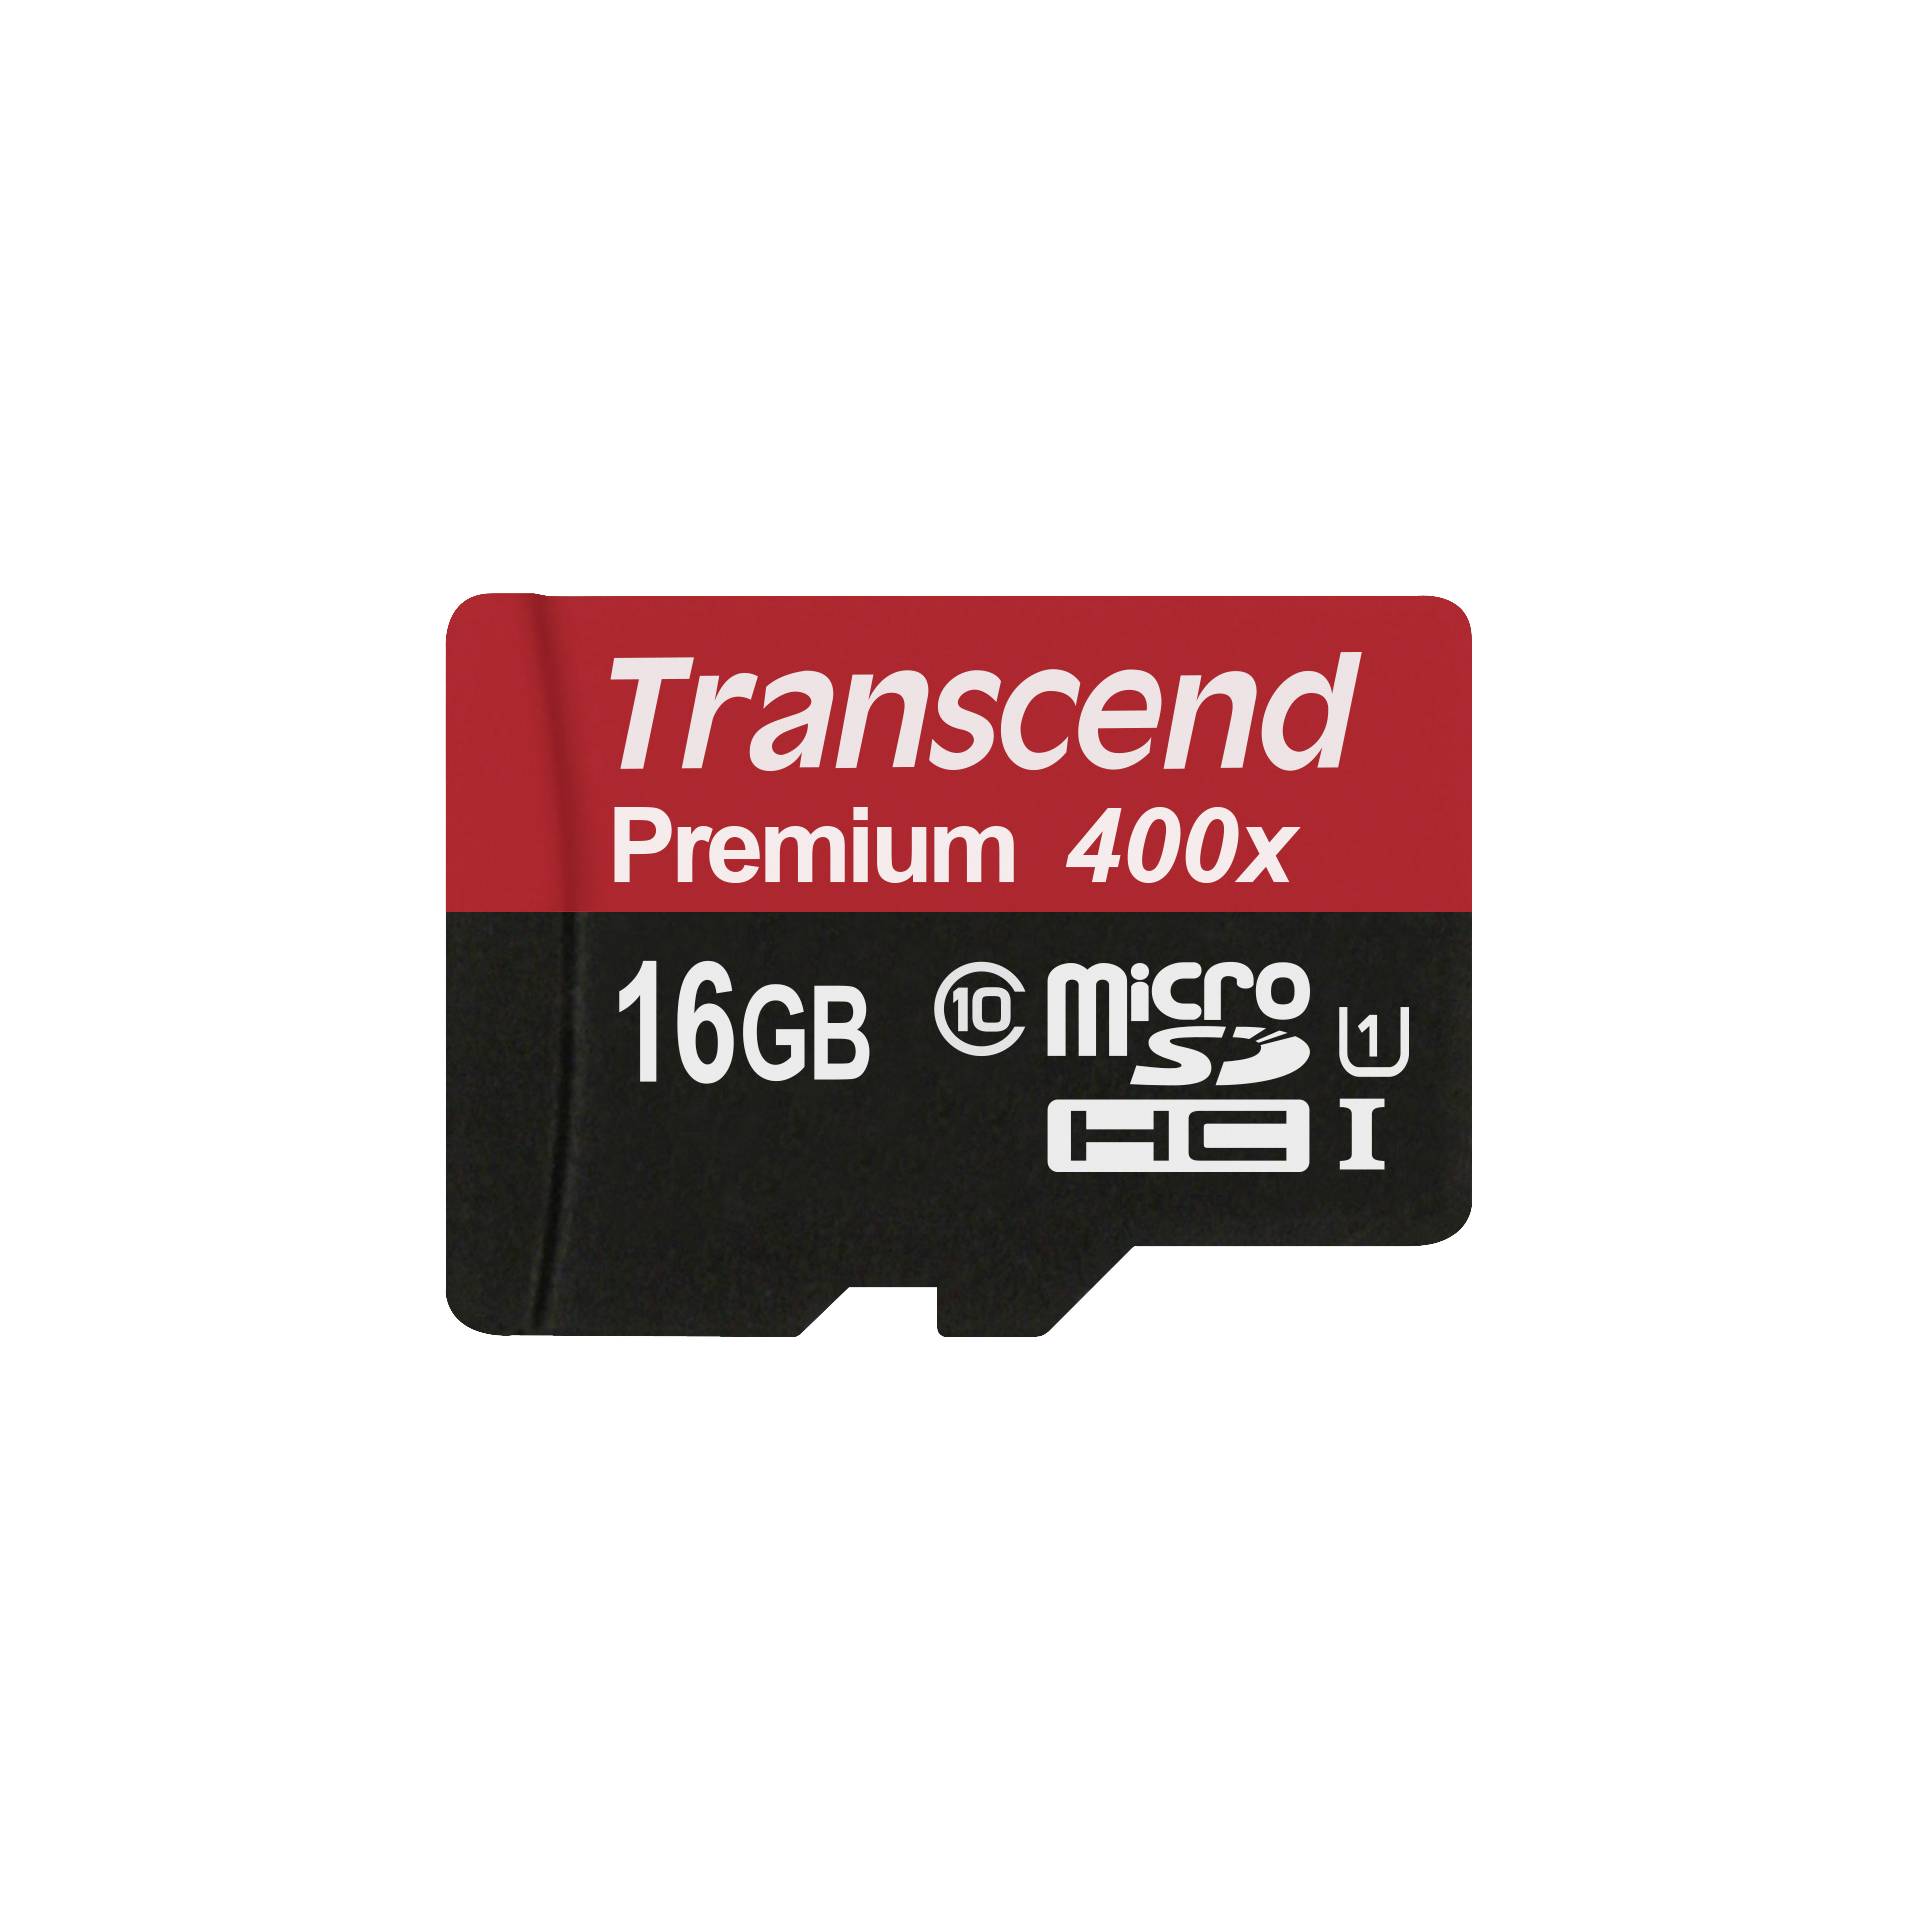 Transcend microSDHC 16GB Class 10 UHS-I 400x + SD adatt.